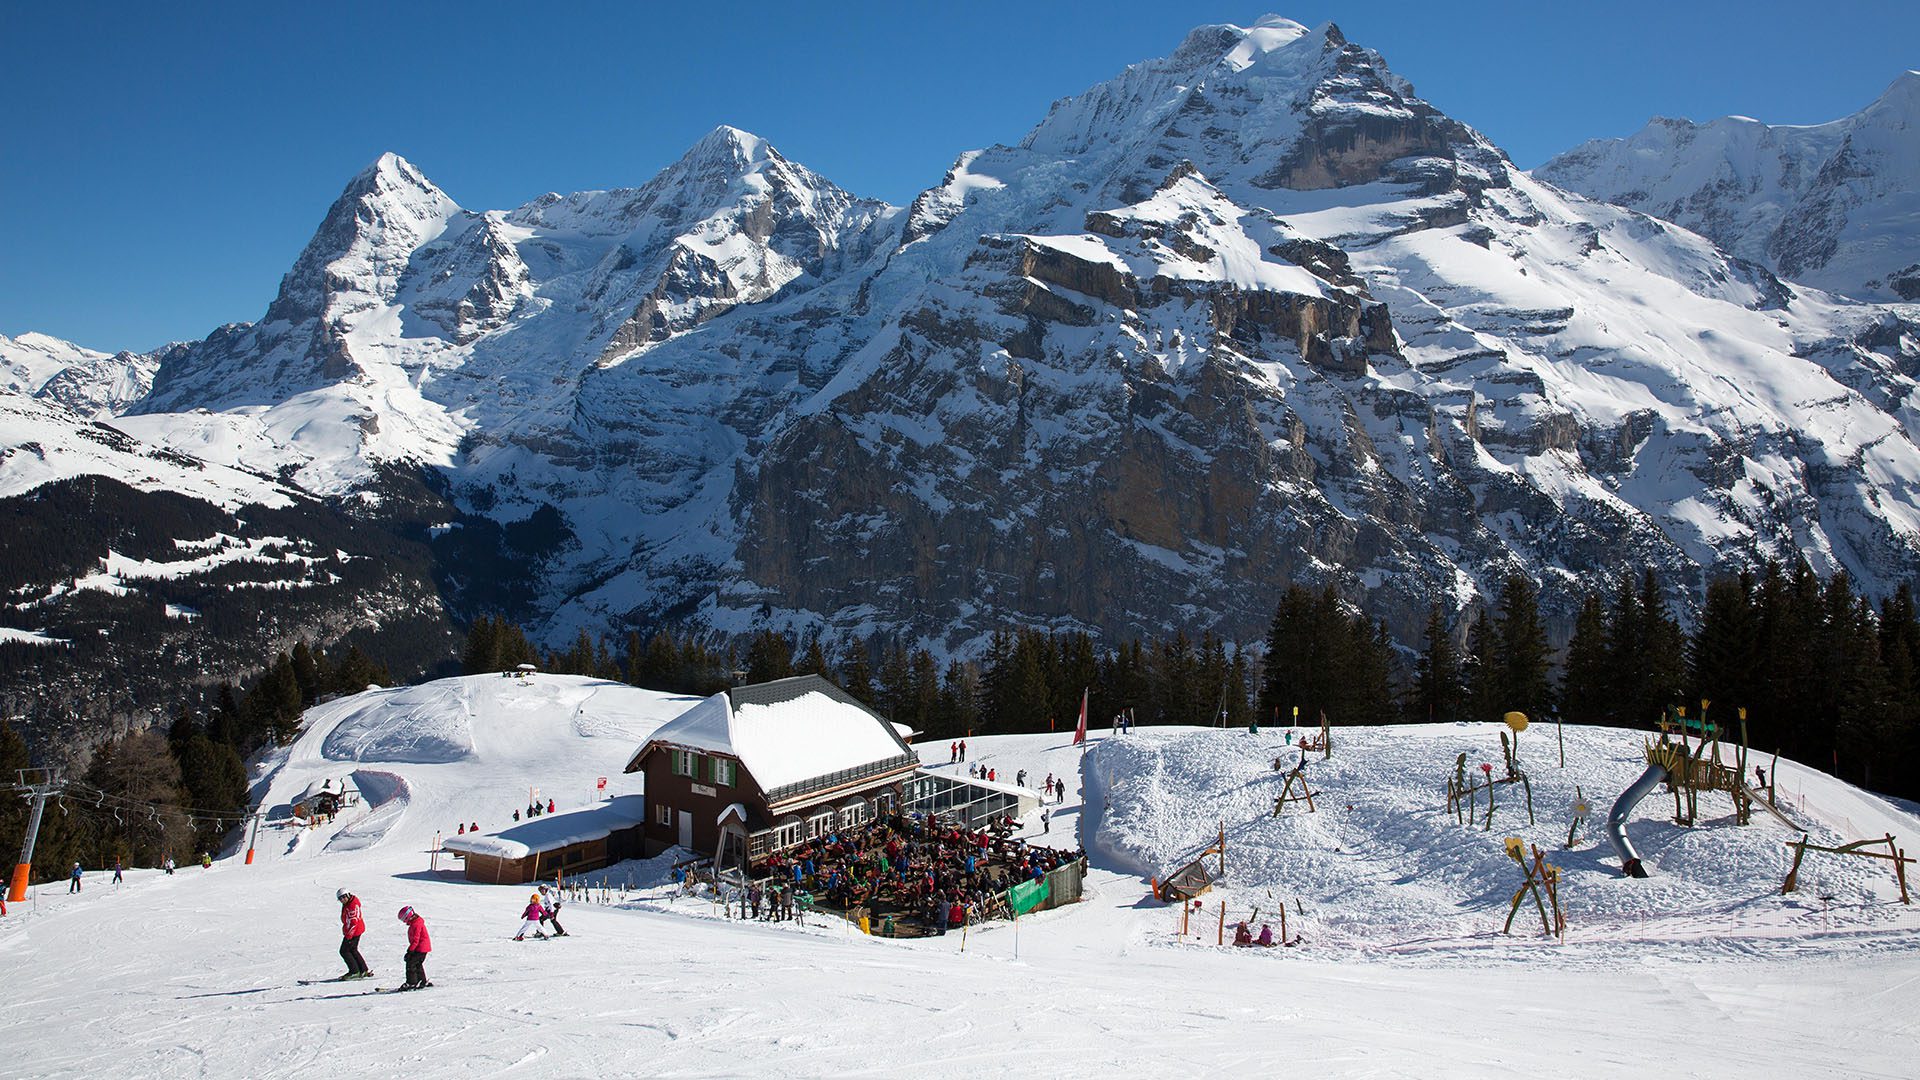 Winter sports holidays in Switzerland – experience Alpine skiing in Mürren